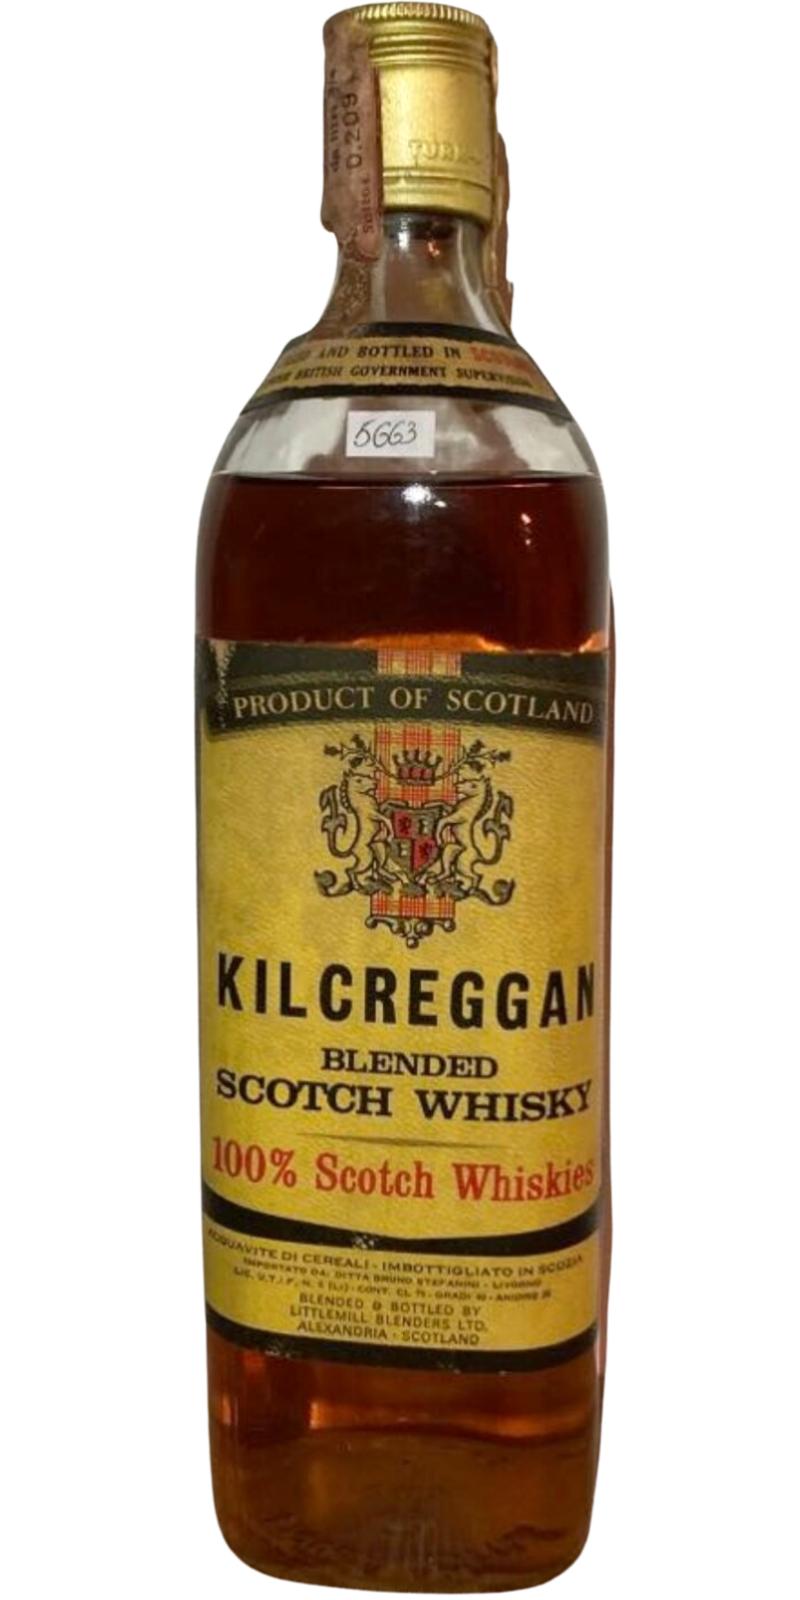 Kilcreggan Blended Scotch Whisky